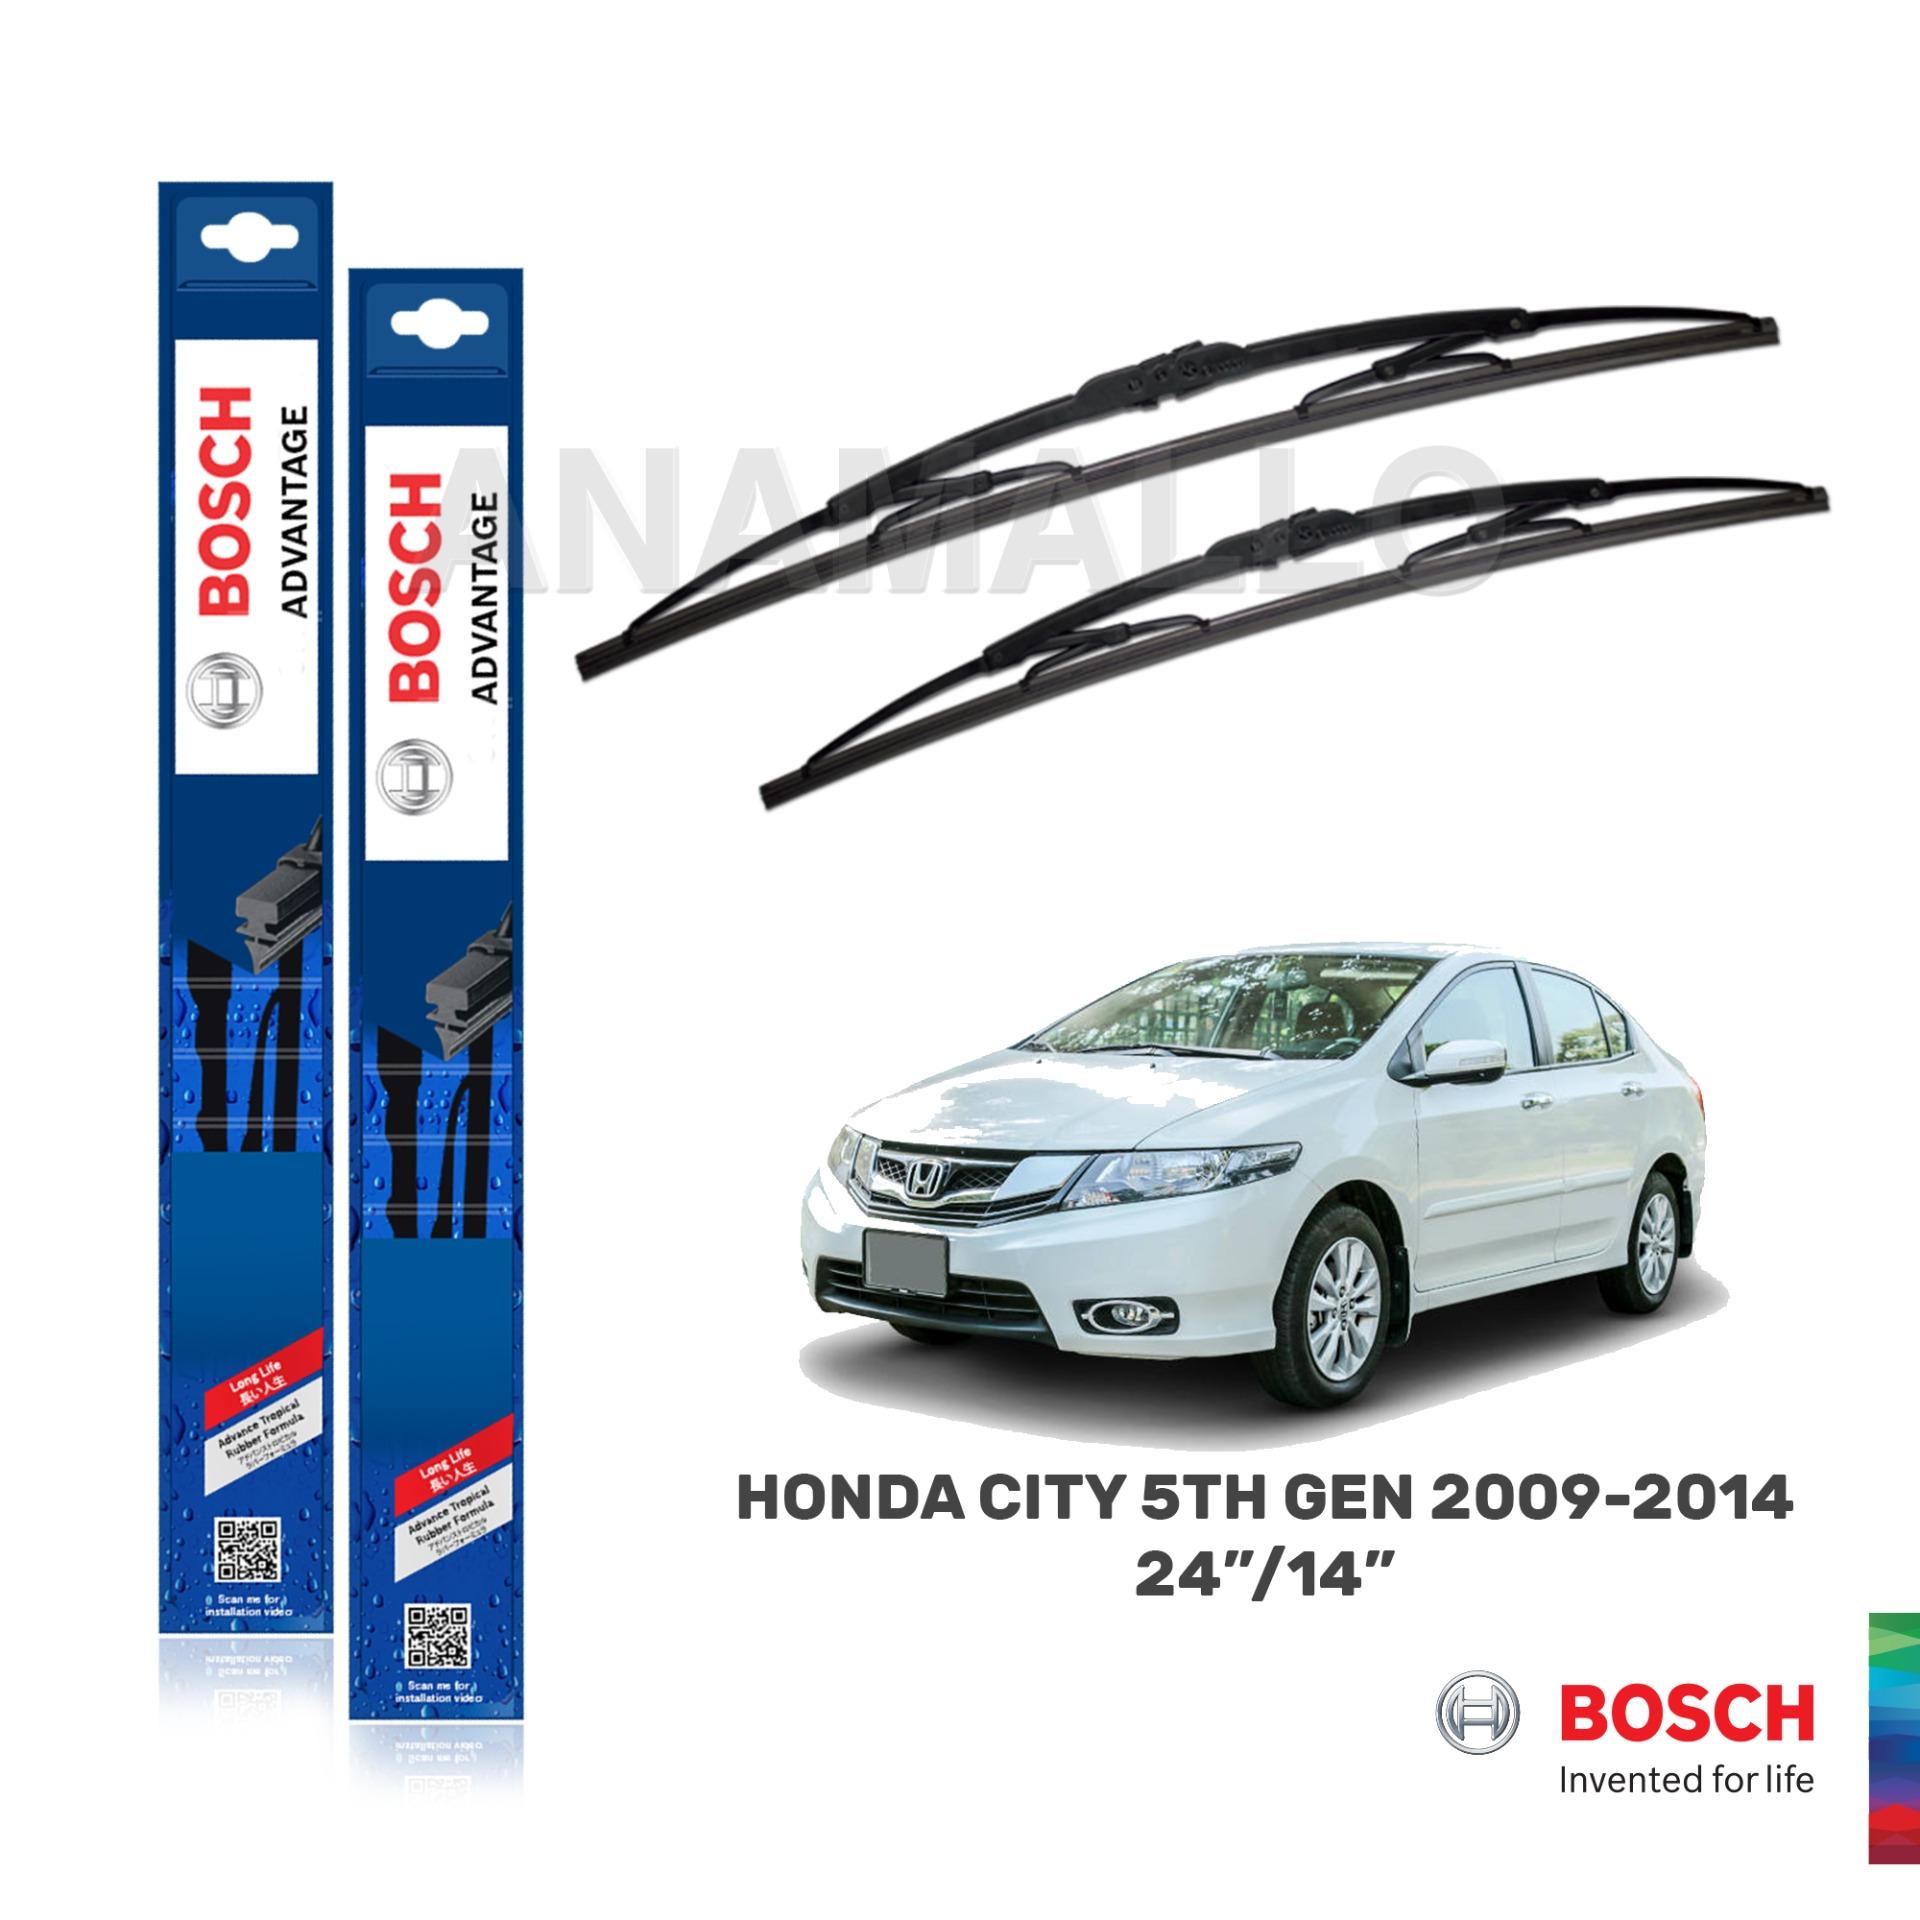 Honda Civic 2015 Windshield Wipers Size - Honda Civic 2015 Honda Civic Ex Windshield Wipers Size